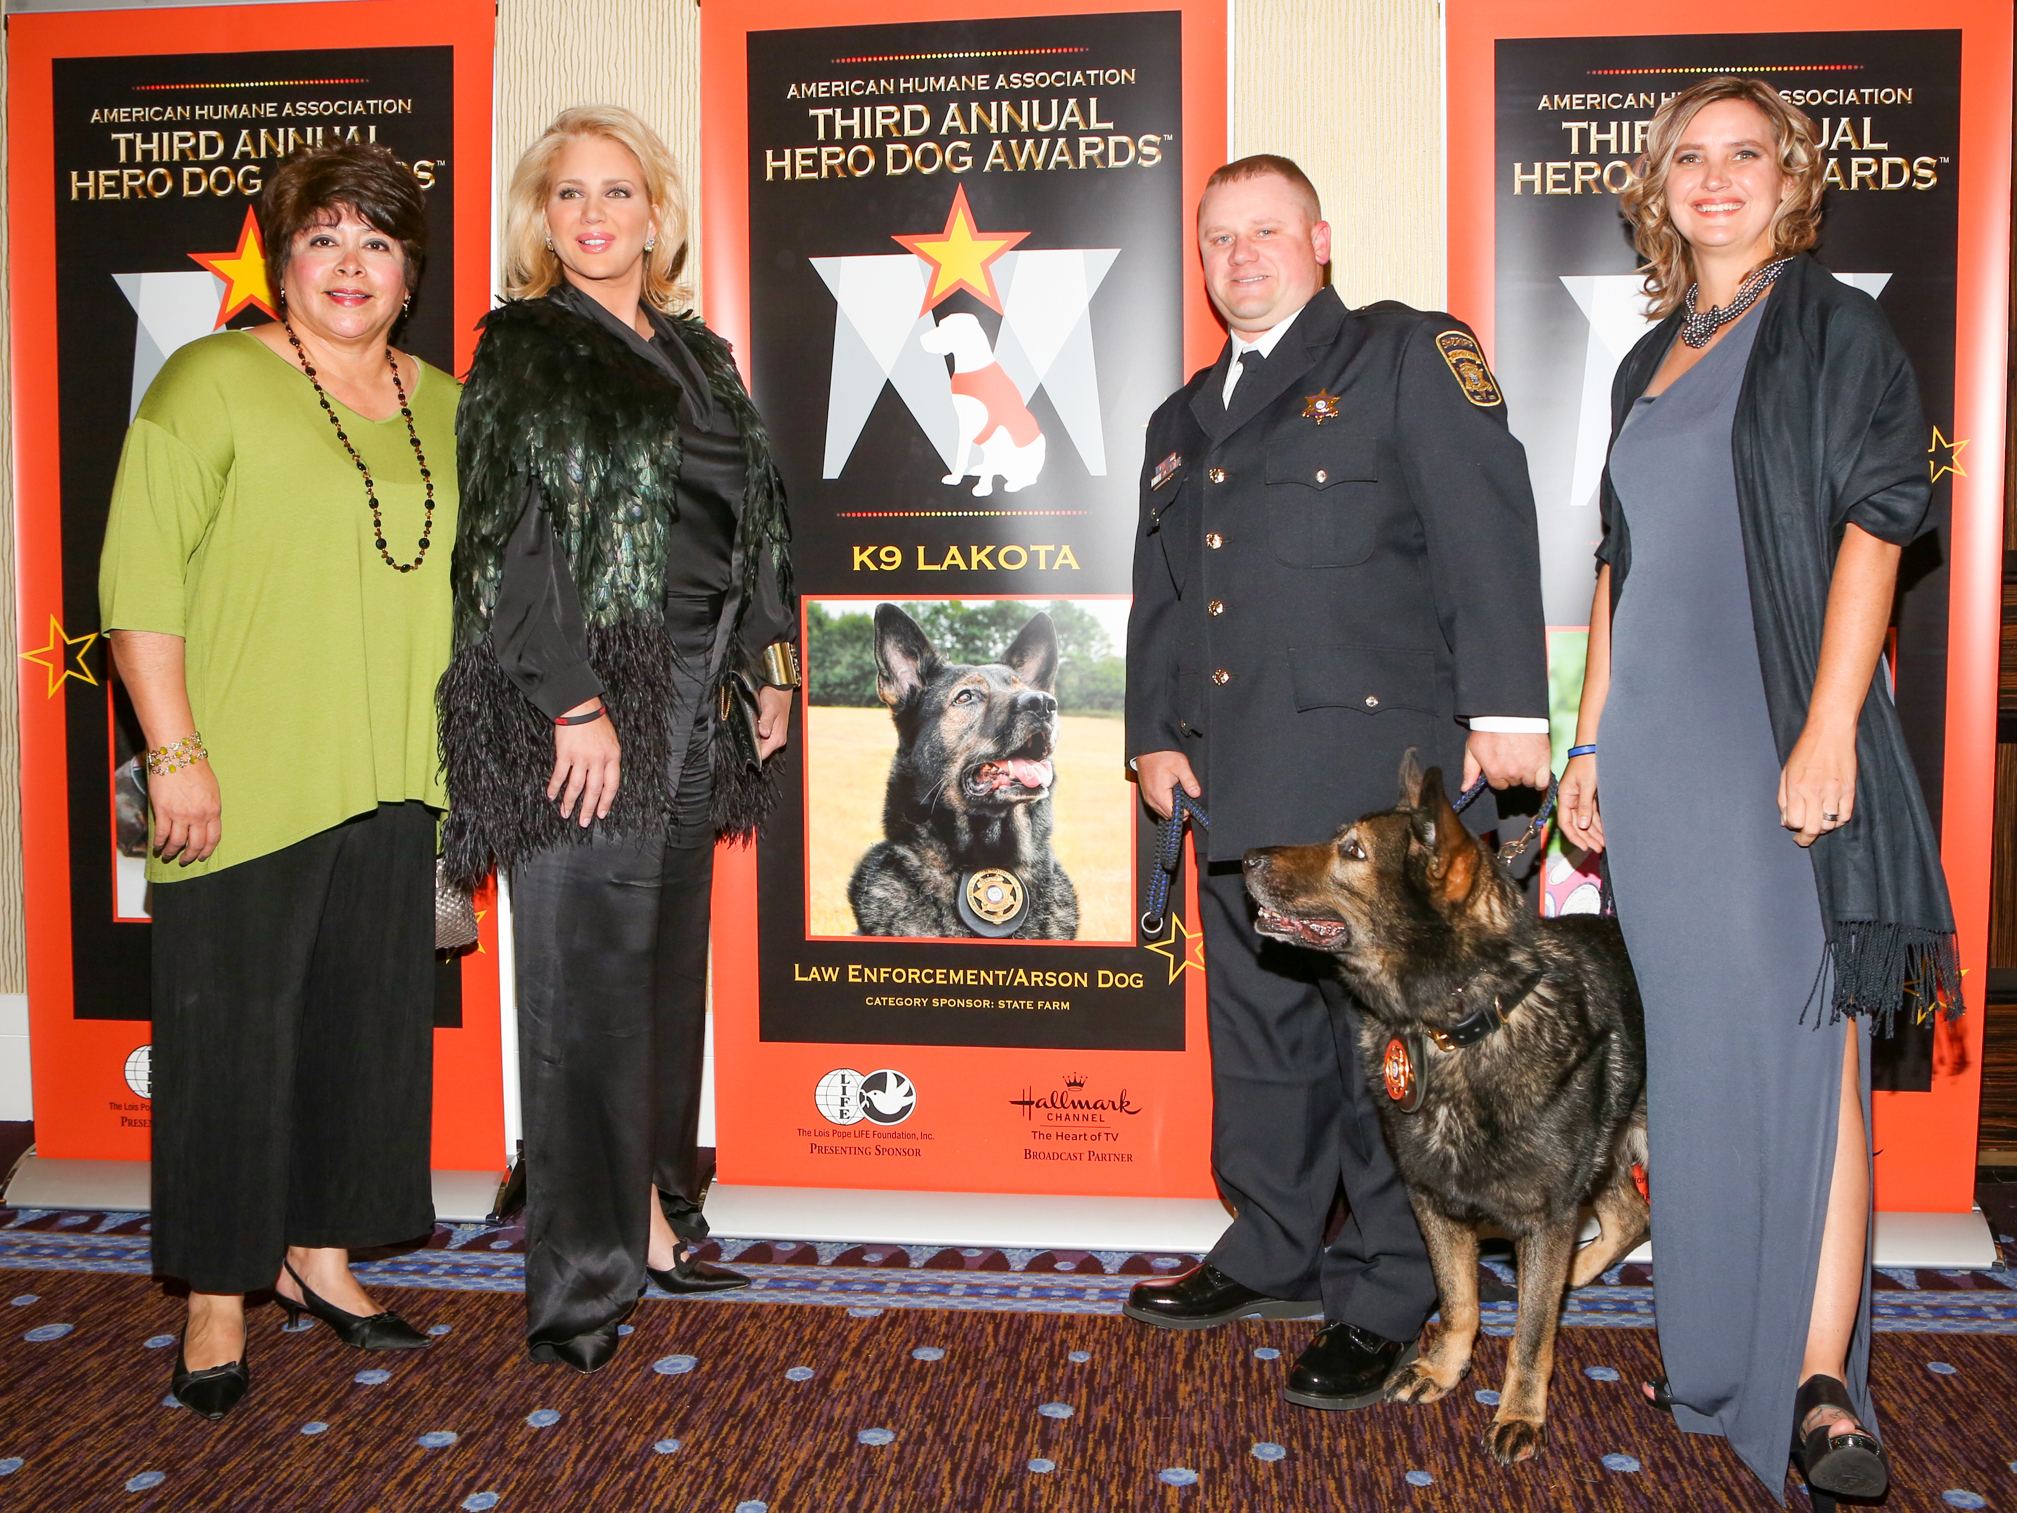 American Humane Association Hero Dog Awards 2013